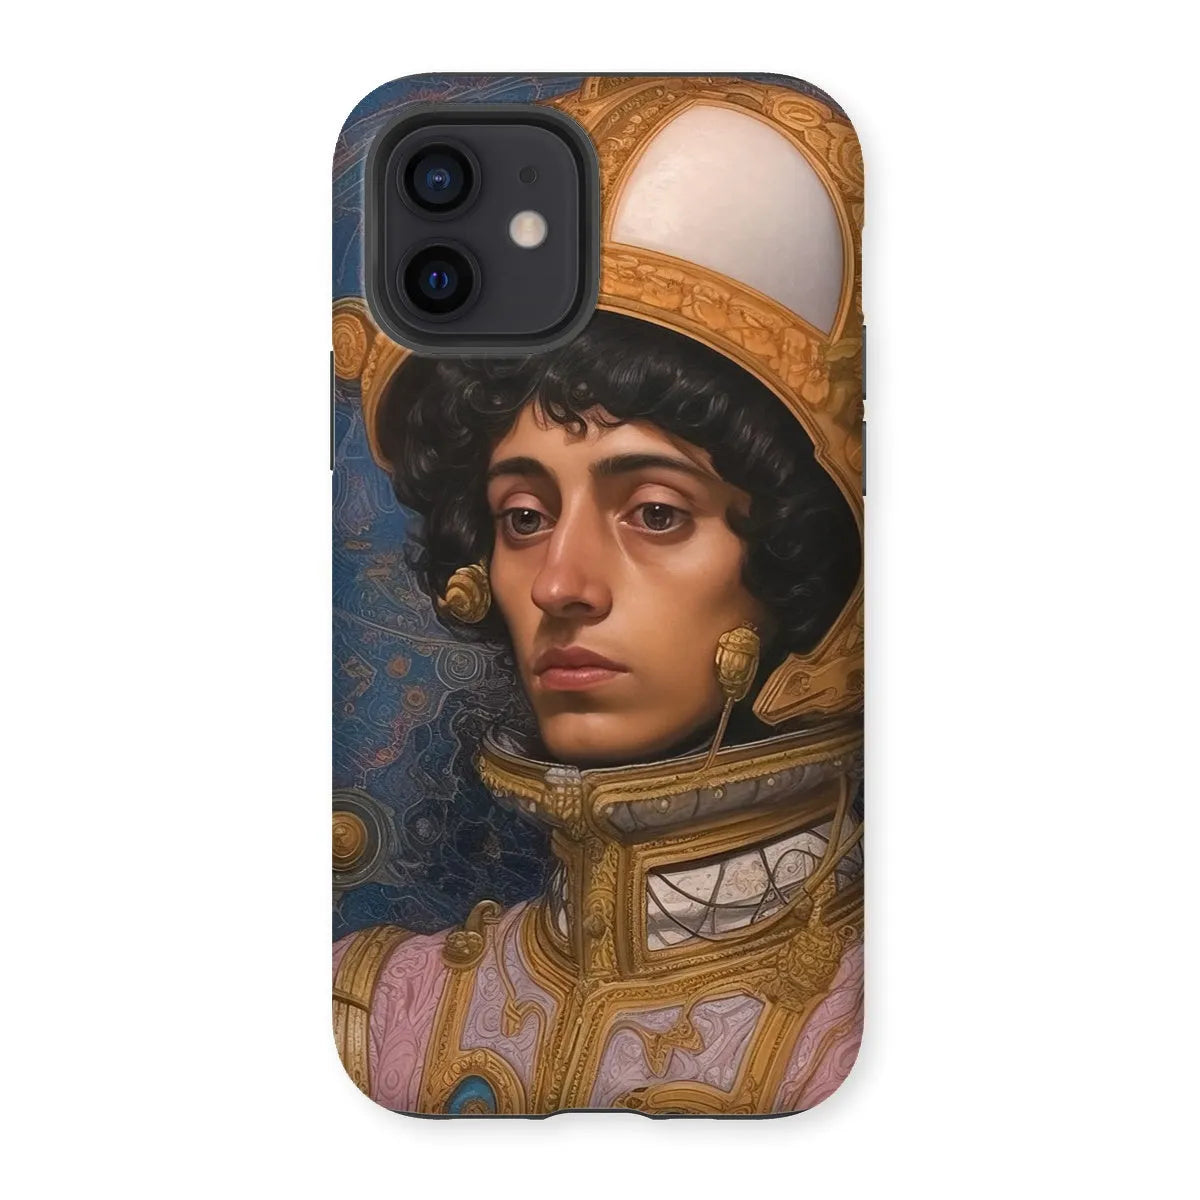 Samir The Gay Astronaut - Lgbtq Art Phone Case - Iphone 12 / Matte - Mobile Phone Cases - Aesthetic Art